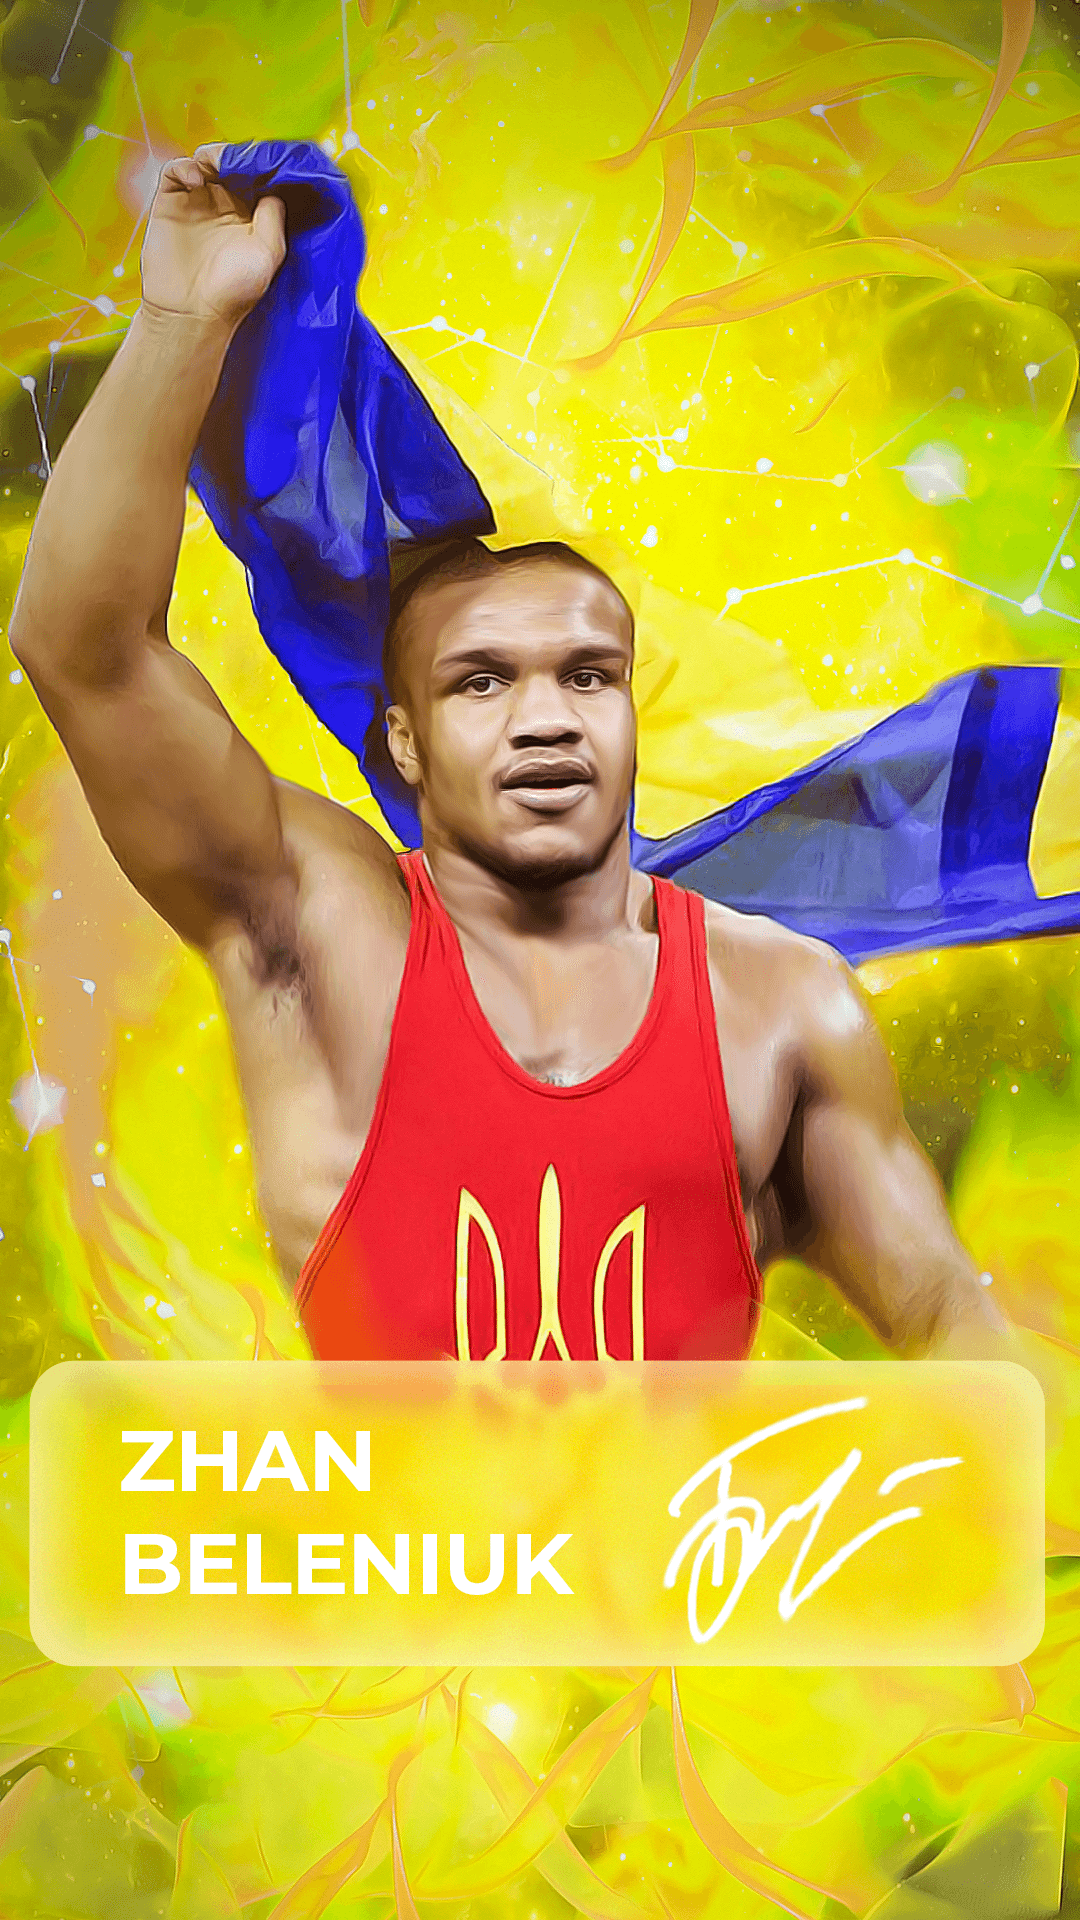 Zhan Beleniuk career in the national team of Ukraine #2